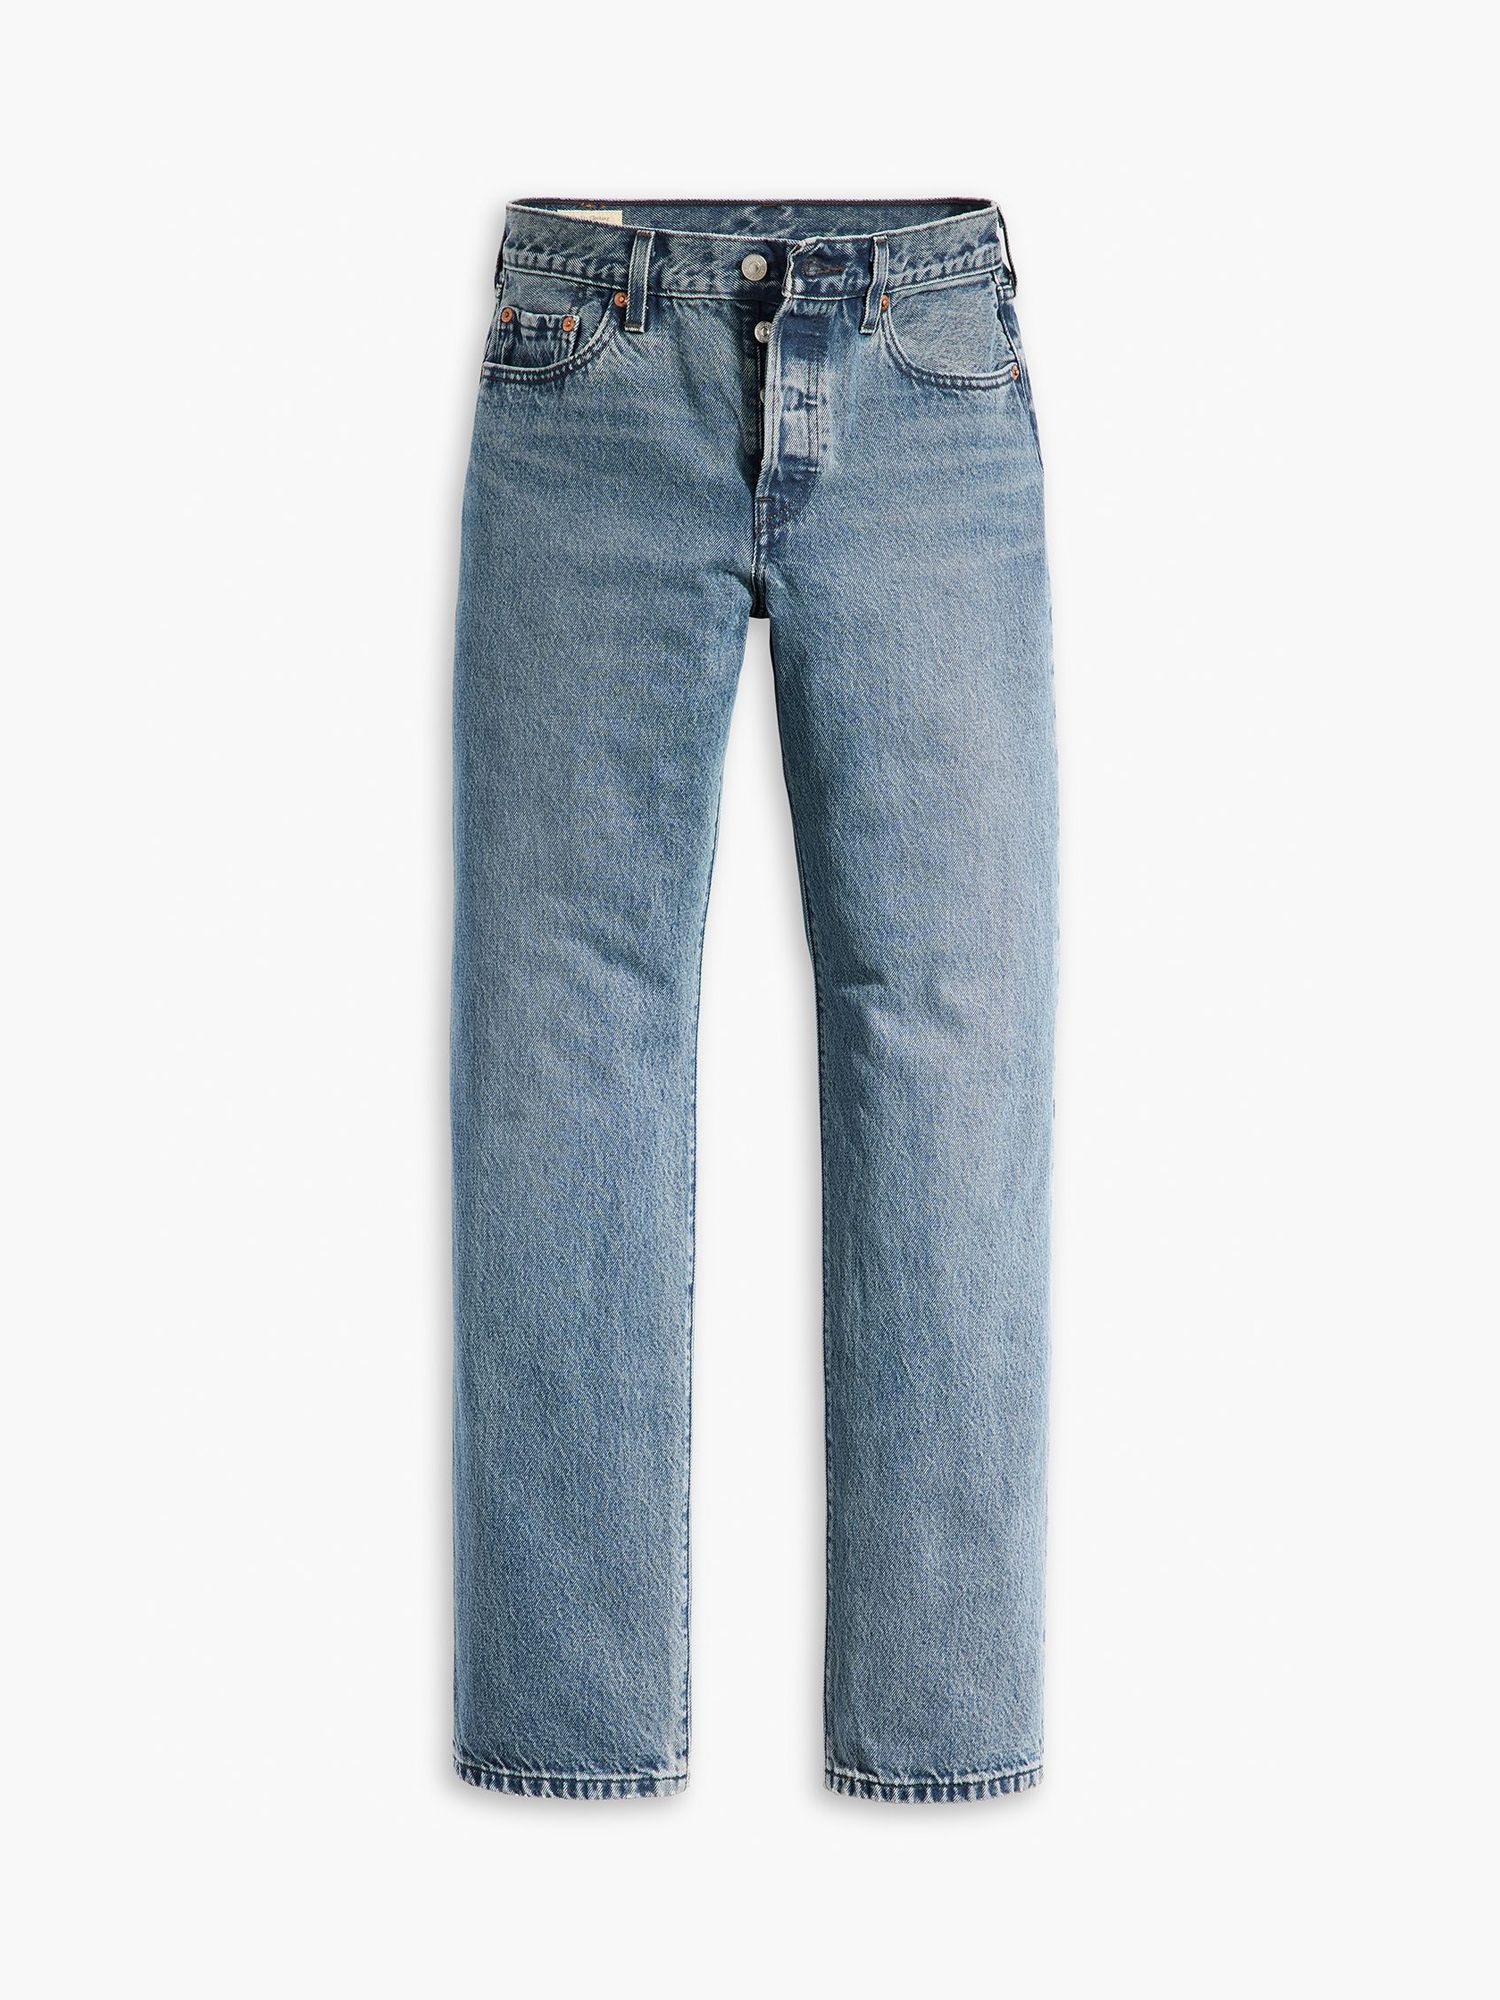 Levi's 501 90's Jeans, Multiple Dimensions at John Lewis & Partners